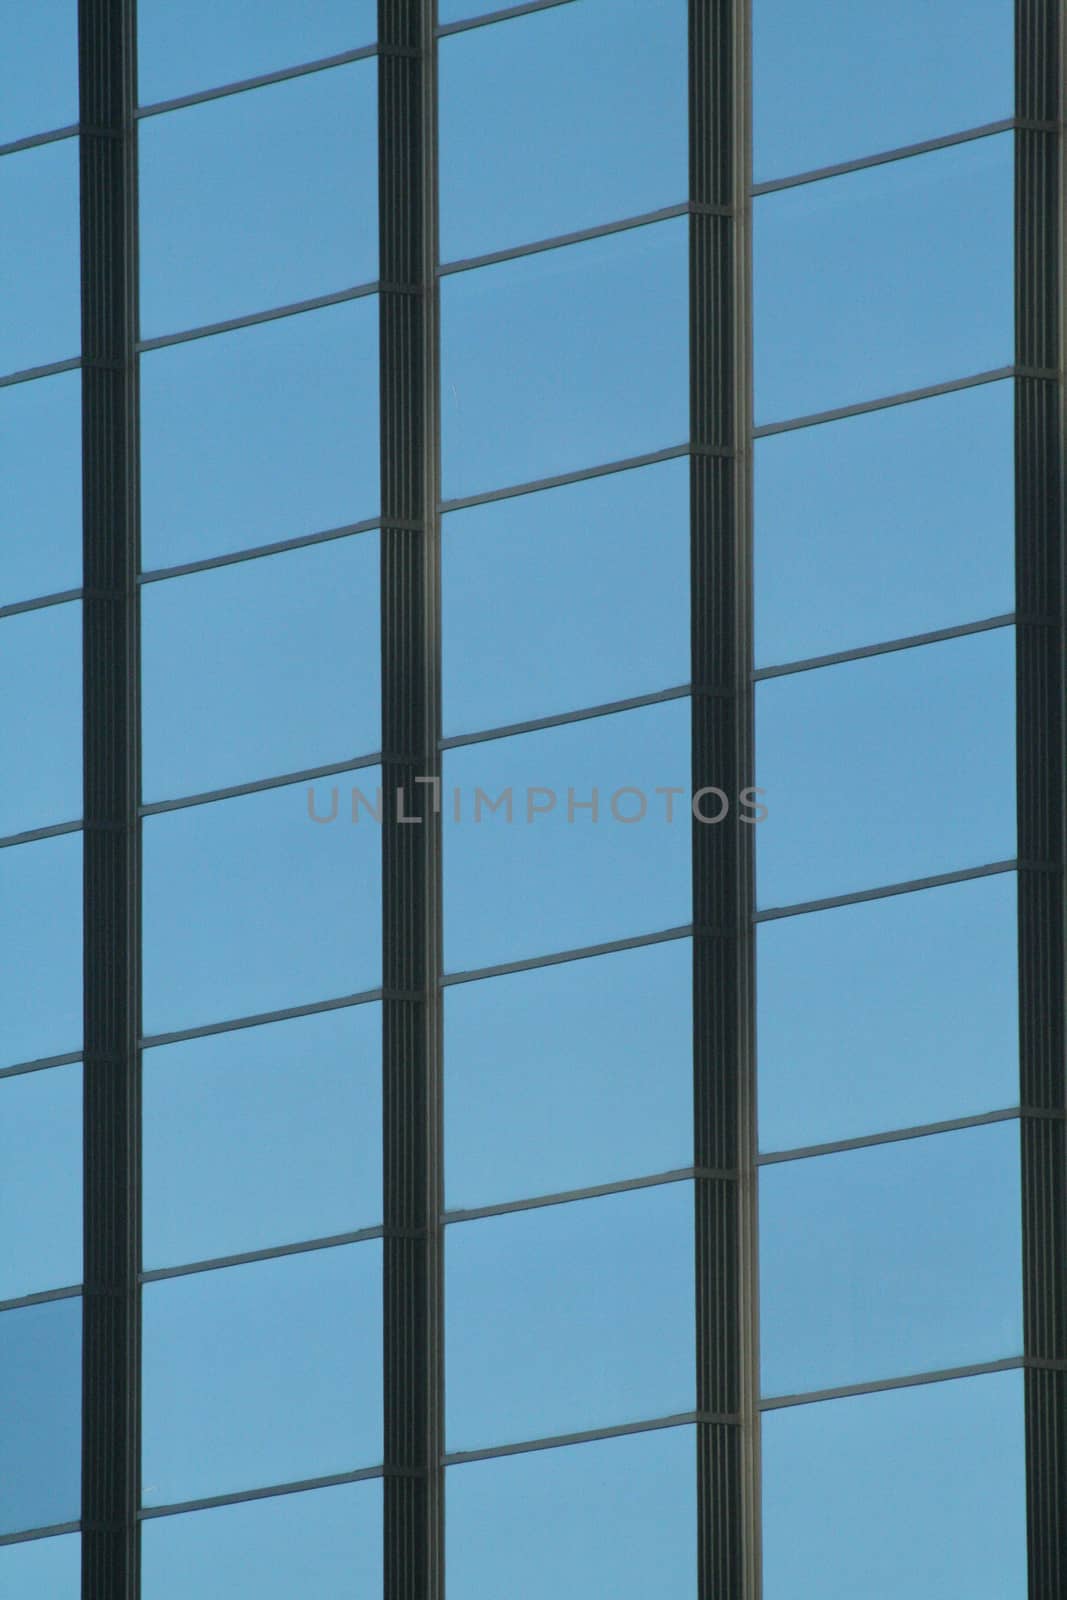 Skyscraper office tower block windows in lines  by edwardolive